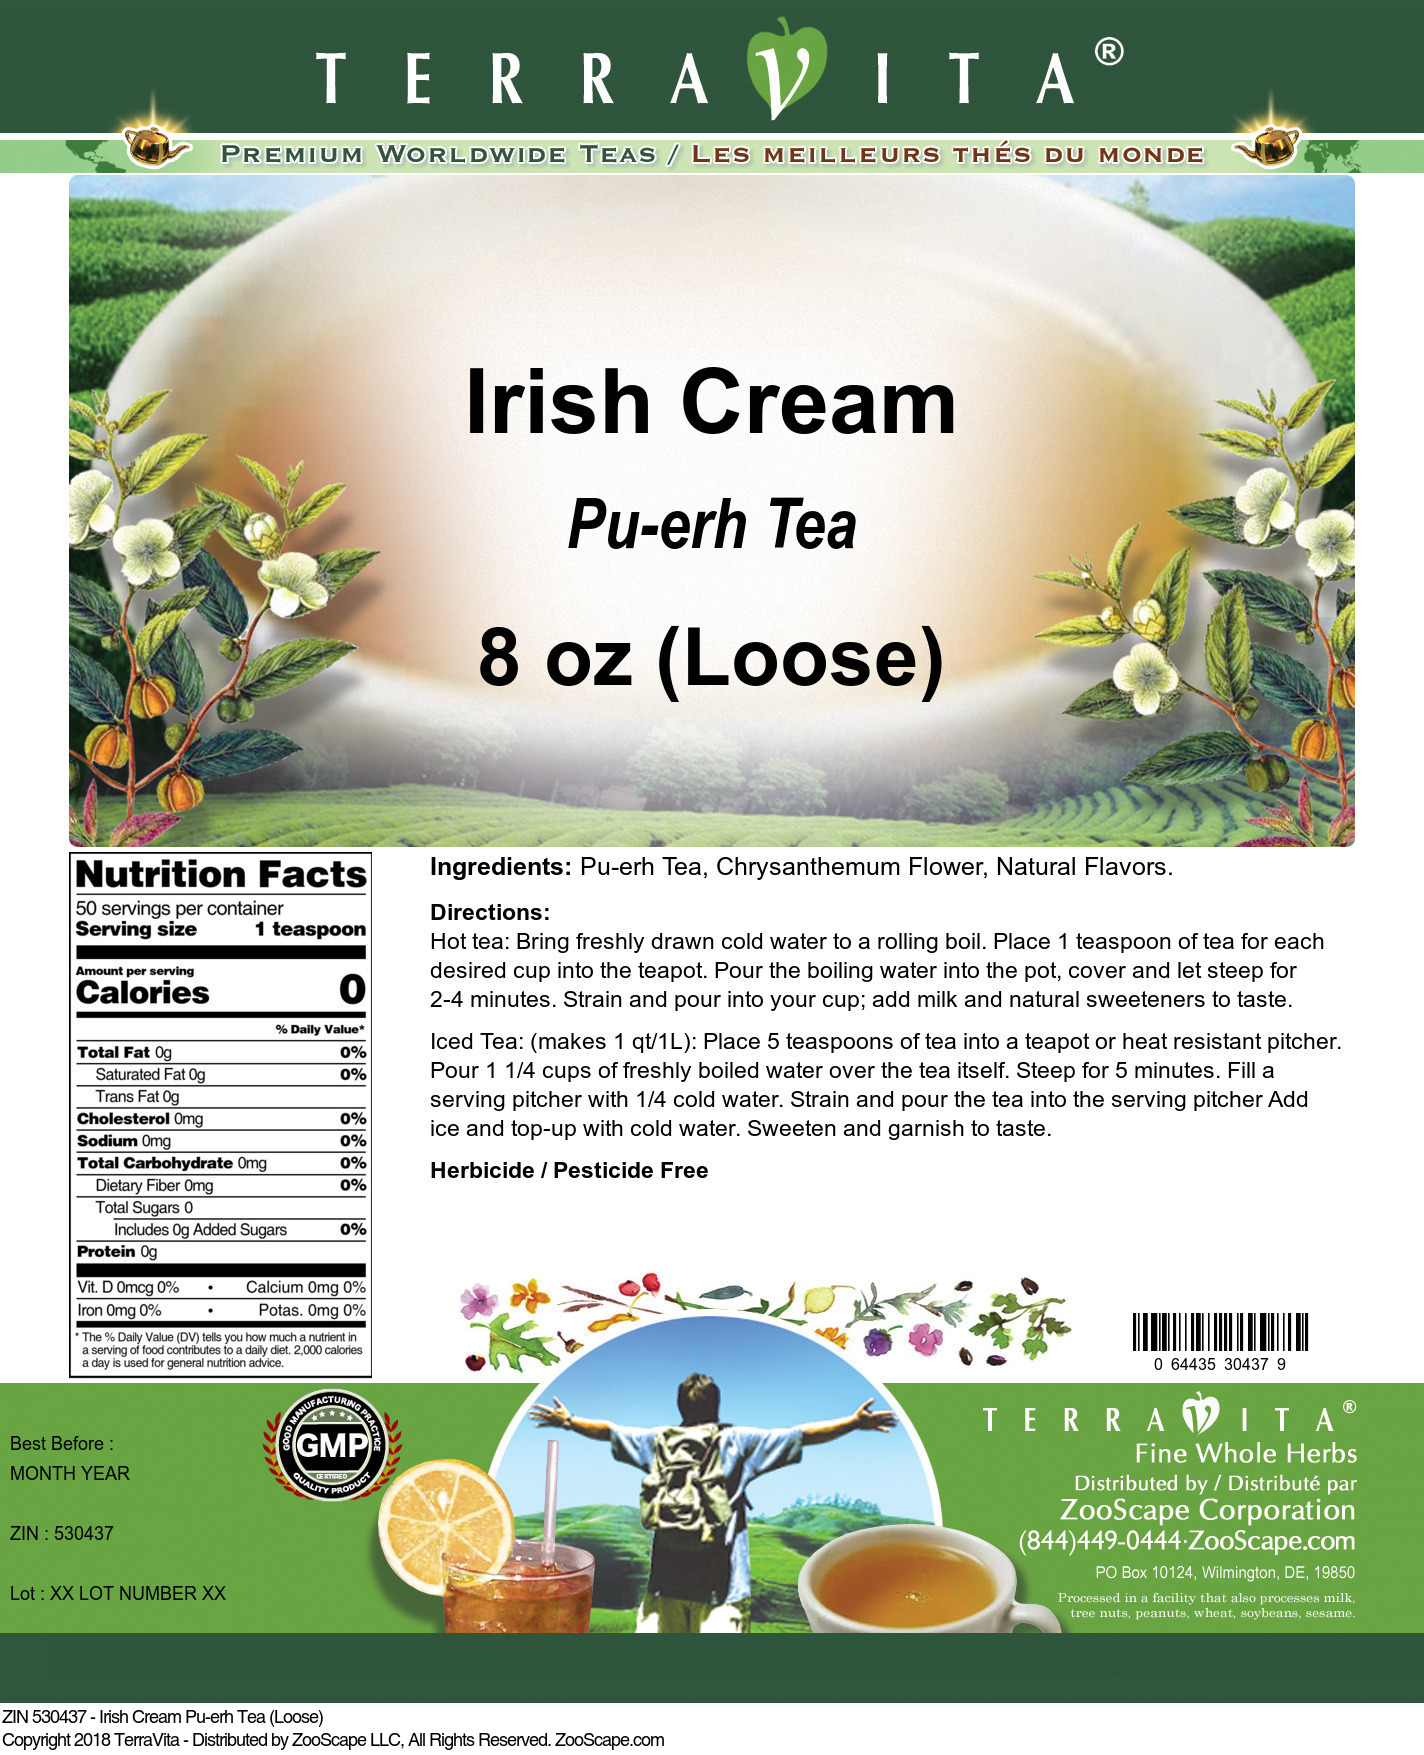 Irish Cream Pu-erh Tea (Loose) - Label